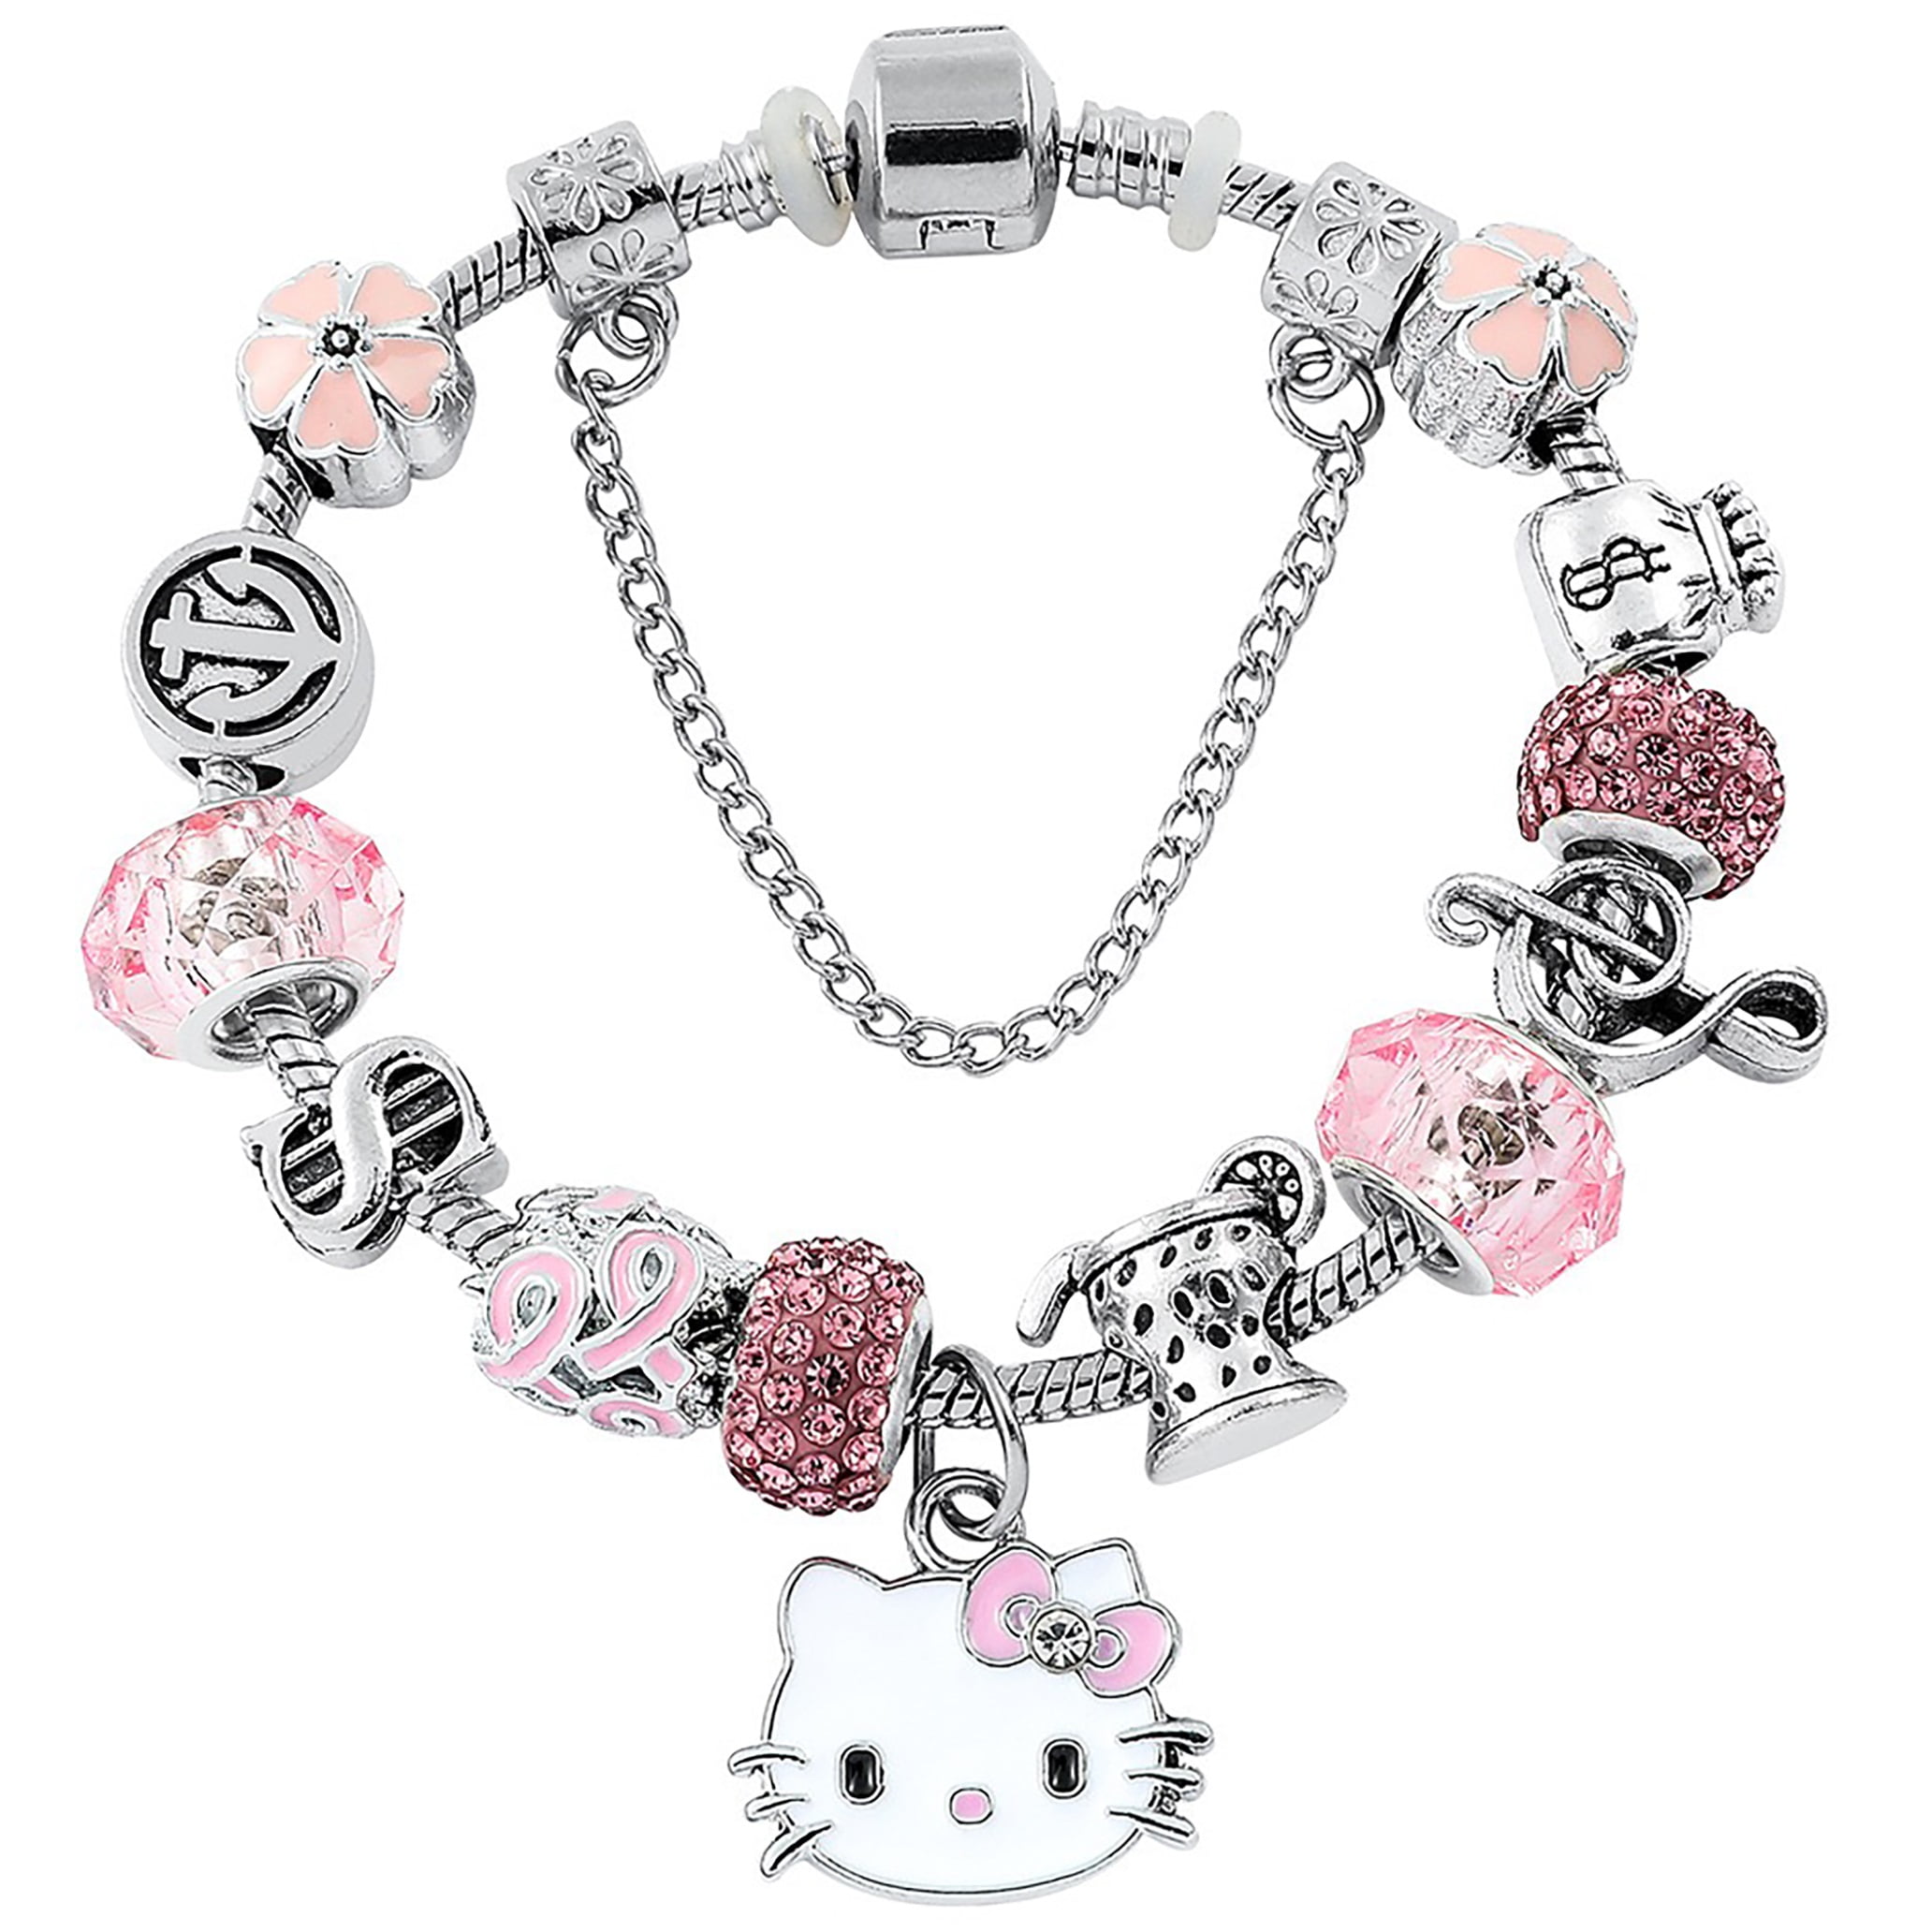 VINCHIC Hello Kitty Bracelet Chain Cuff Jewelry Charms for Bracelets  Fashion Cartoon Accessories for Women Girls Kids Sisters 